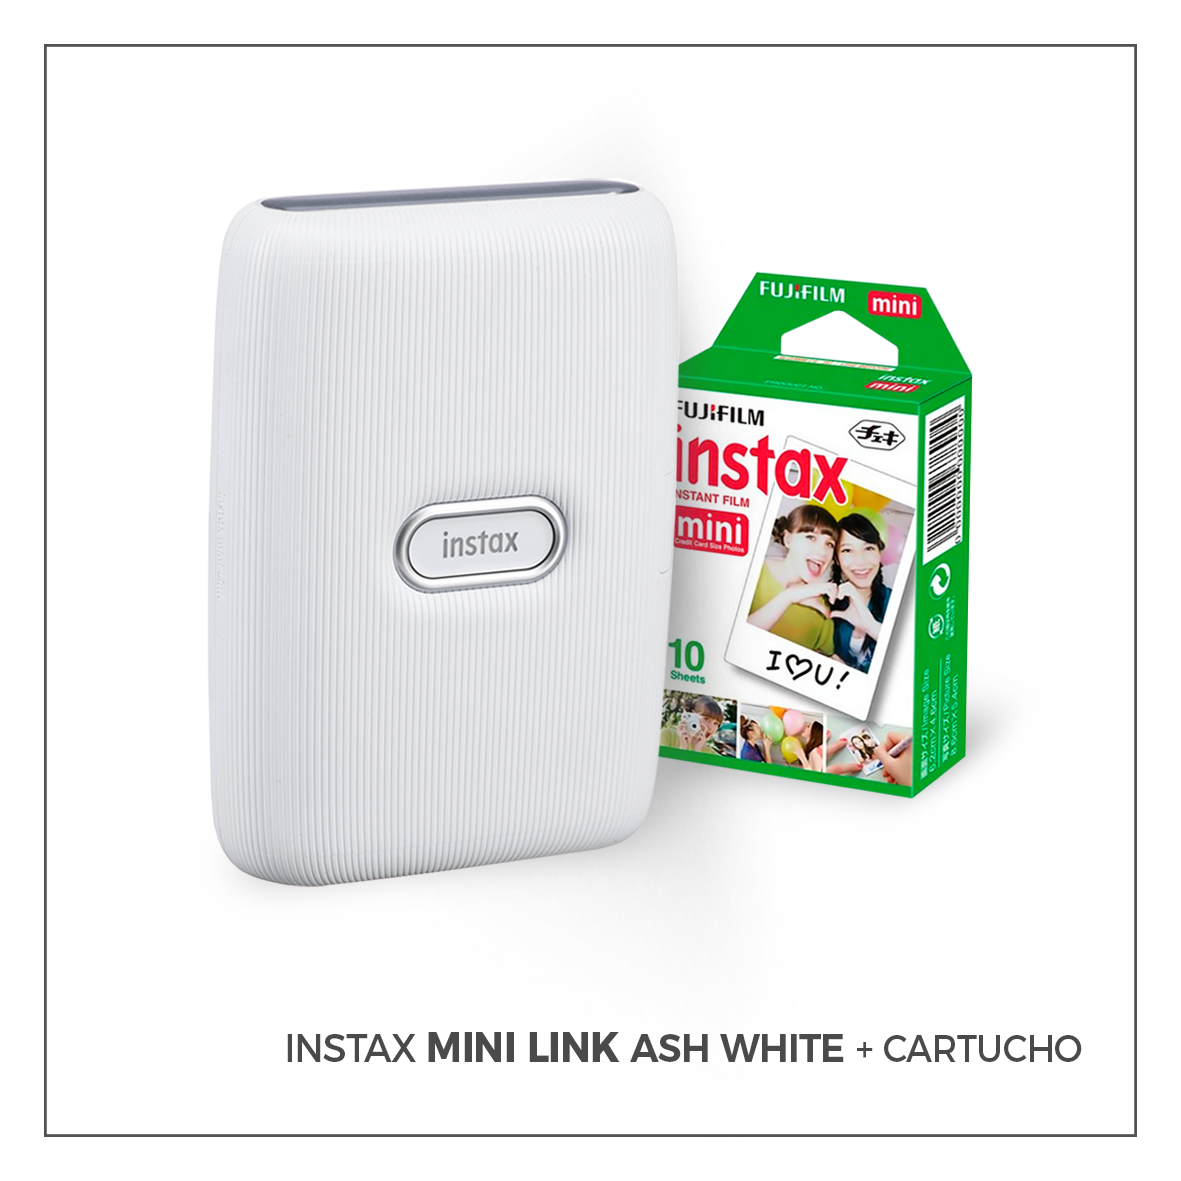 Fujistore  Impresora Instax MINI LINK Ash White + Cartucho x 10unds.